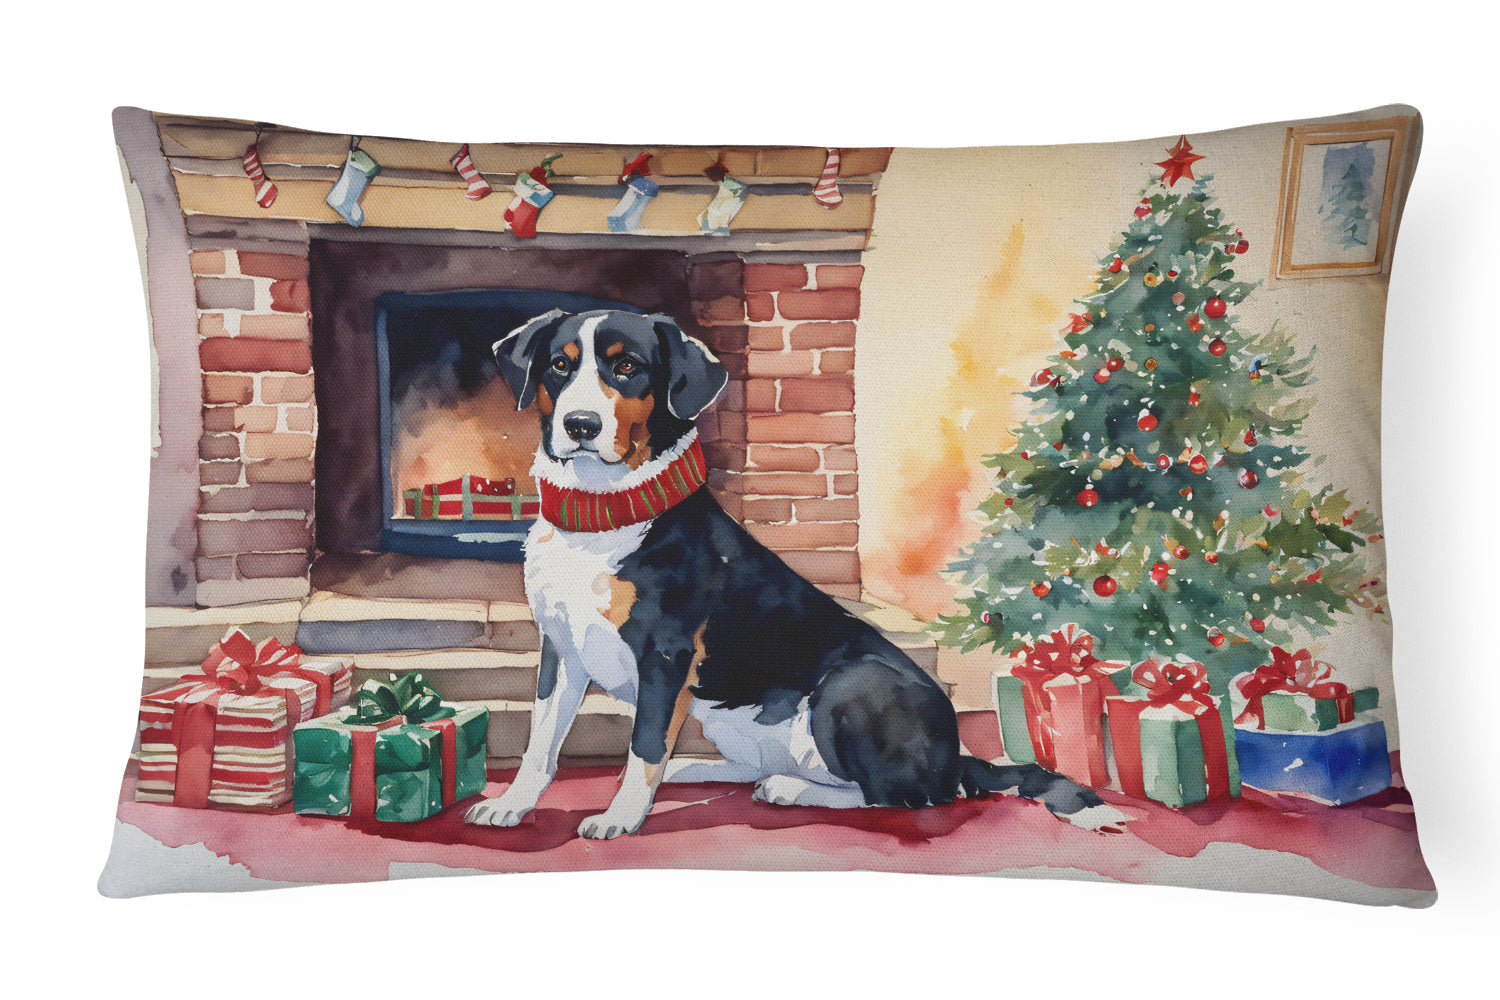 Buy this Appenzeller Sennenhund Cozy Christmas Throw Pillow